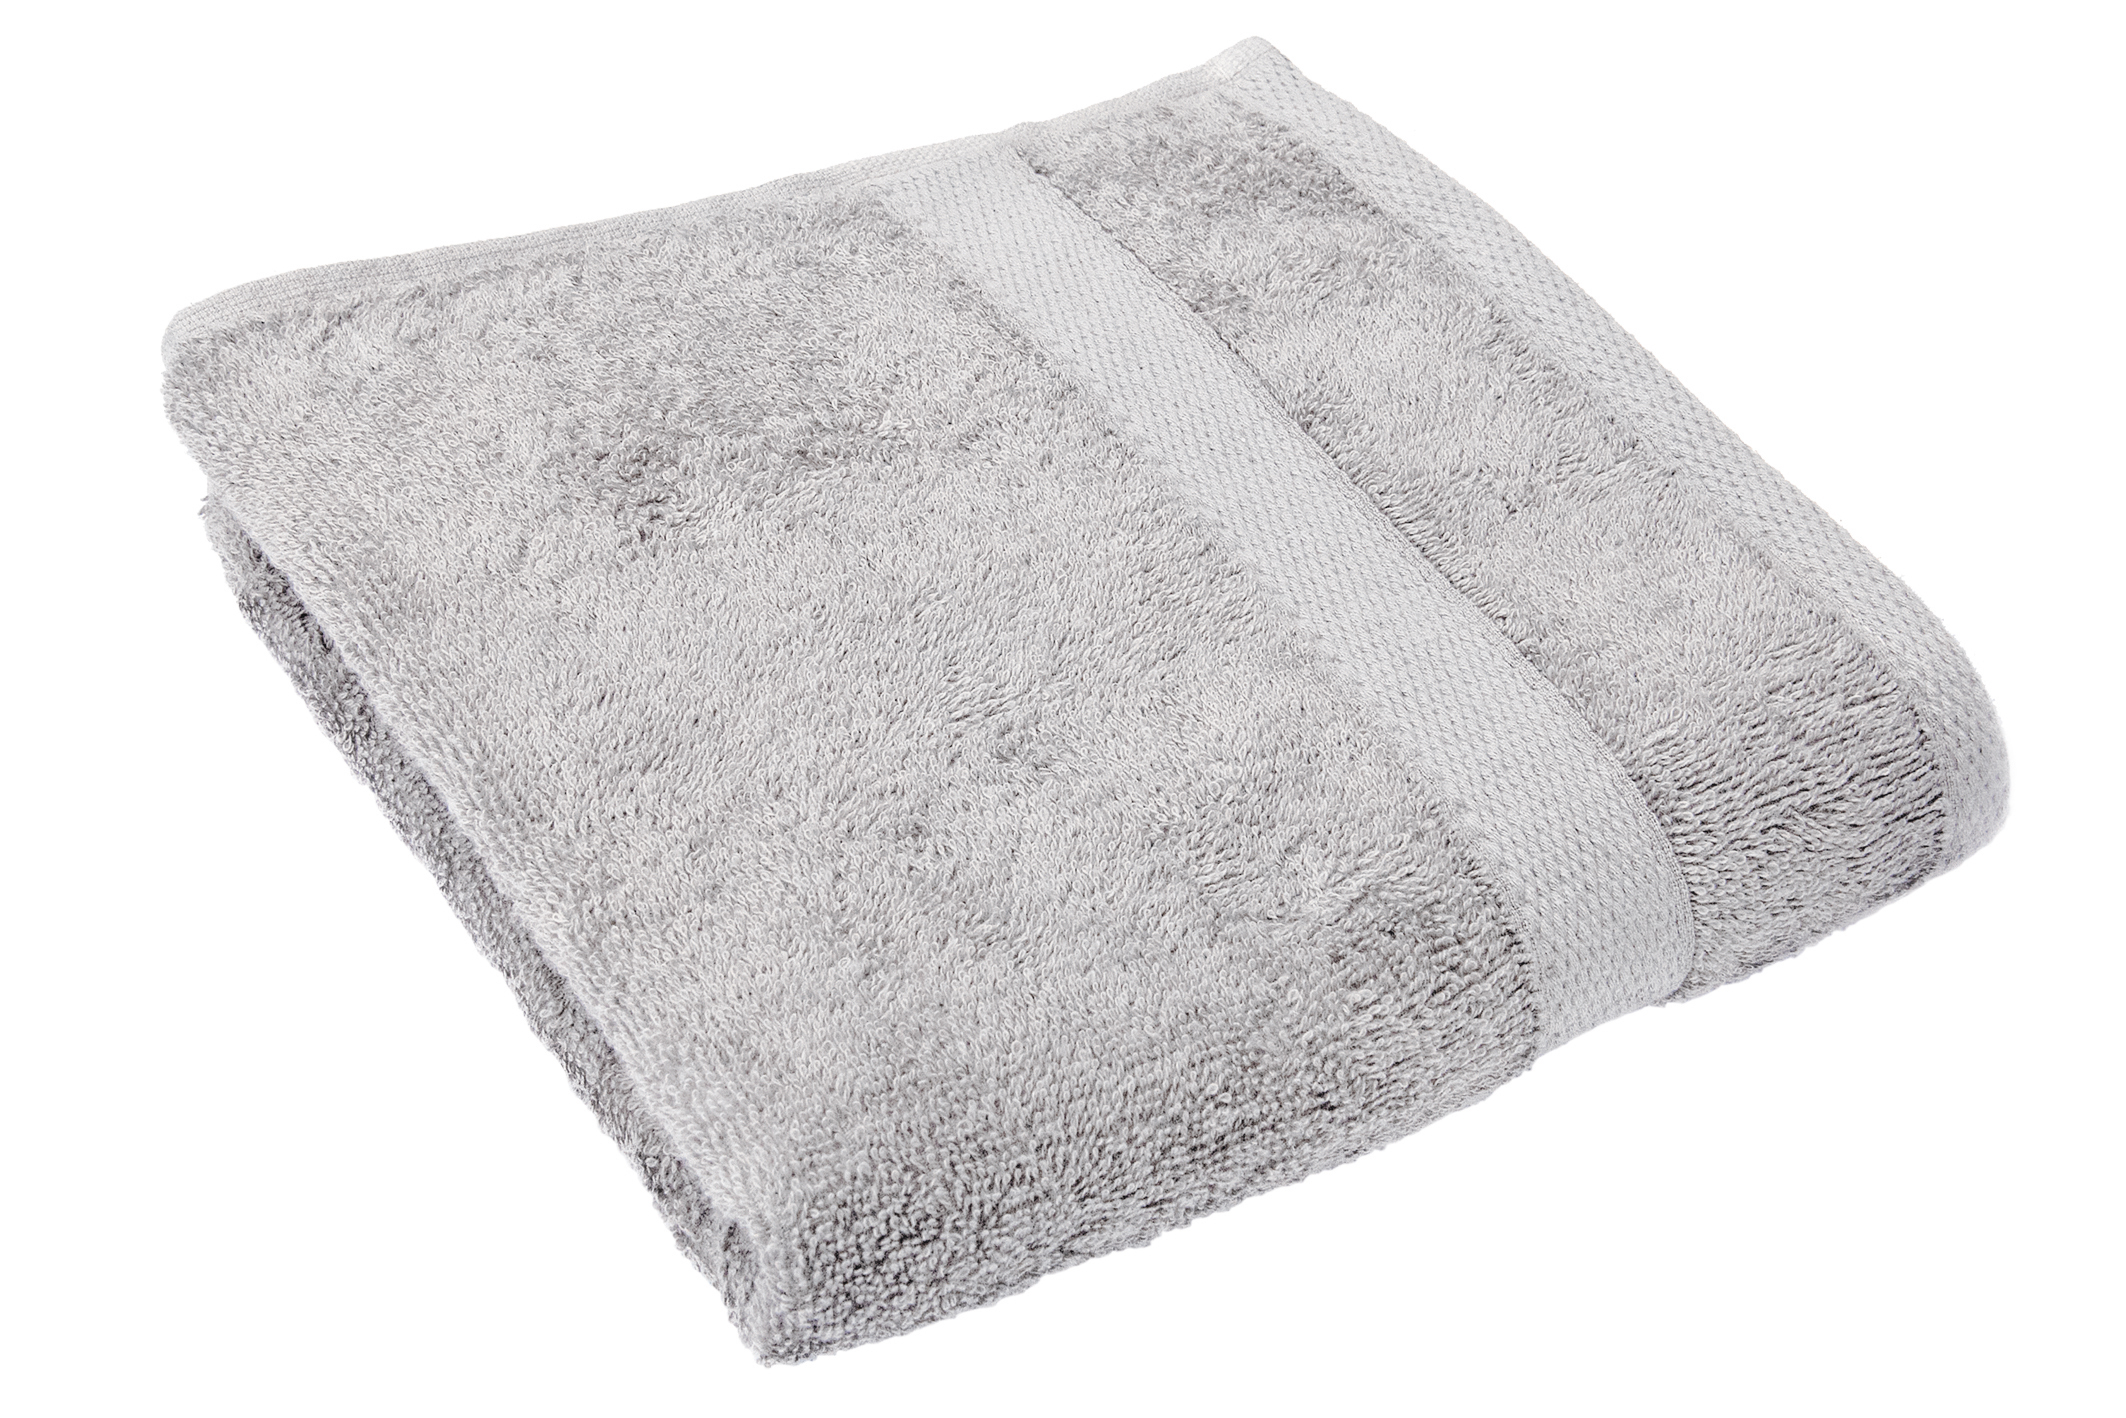 Shower towel 100x150cm, cool grey